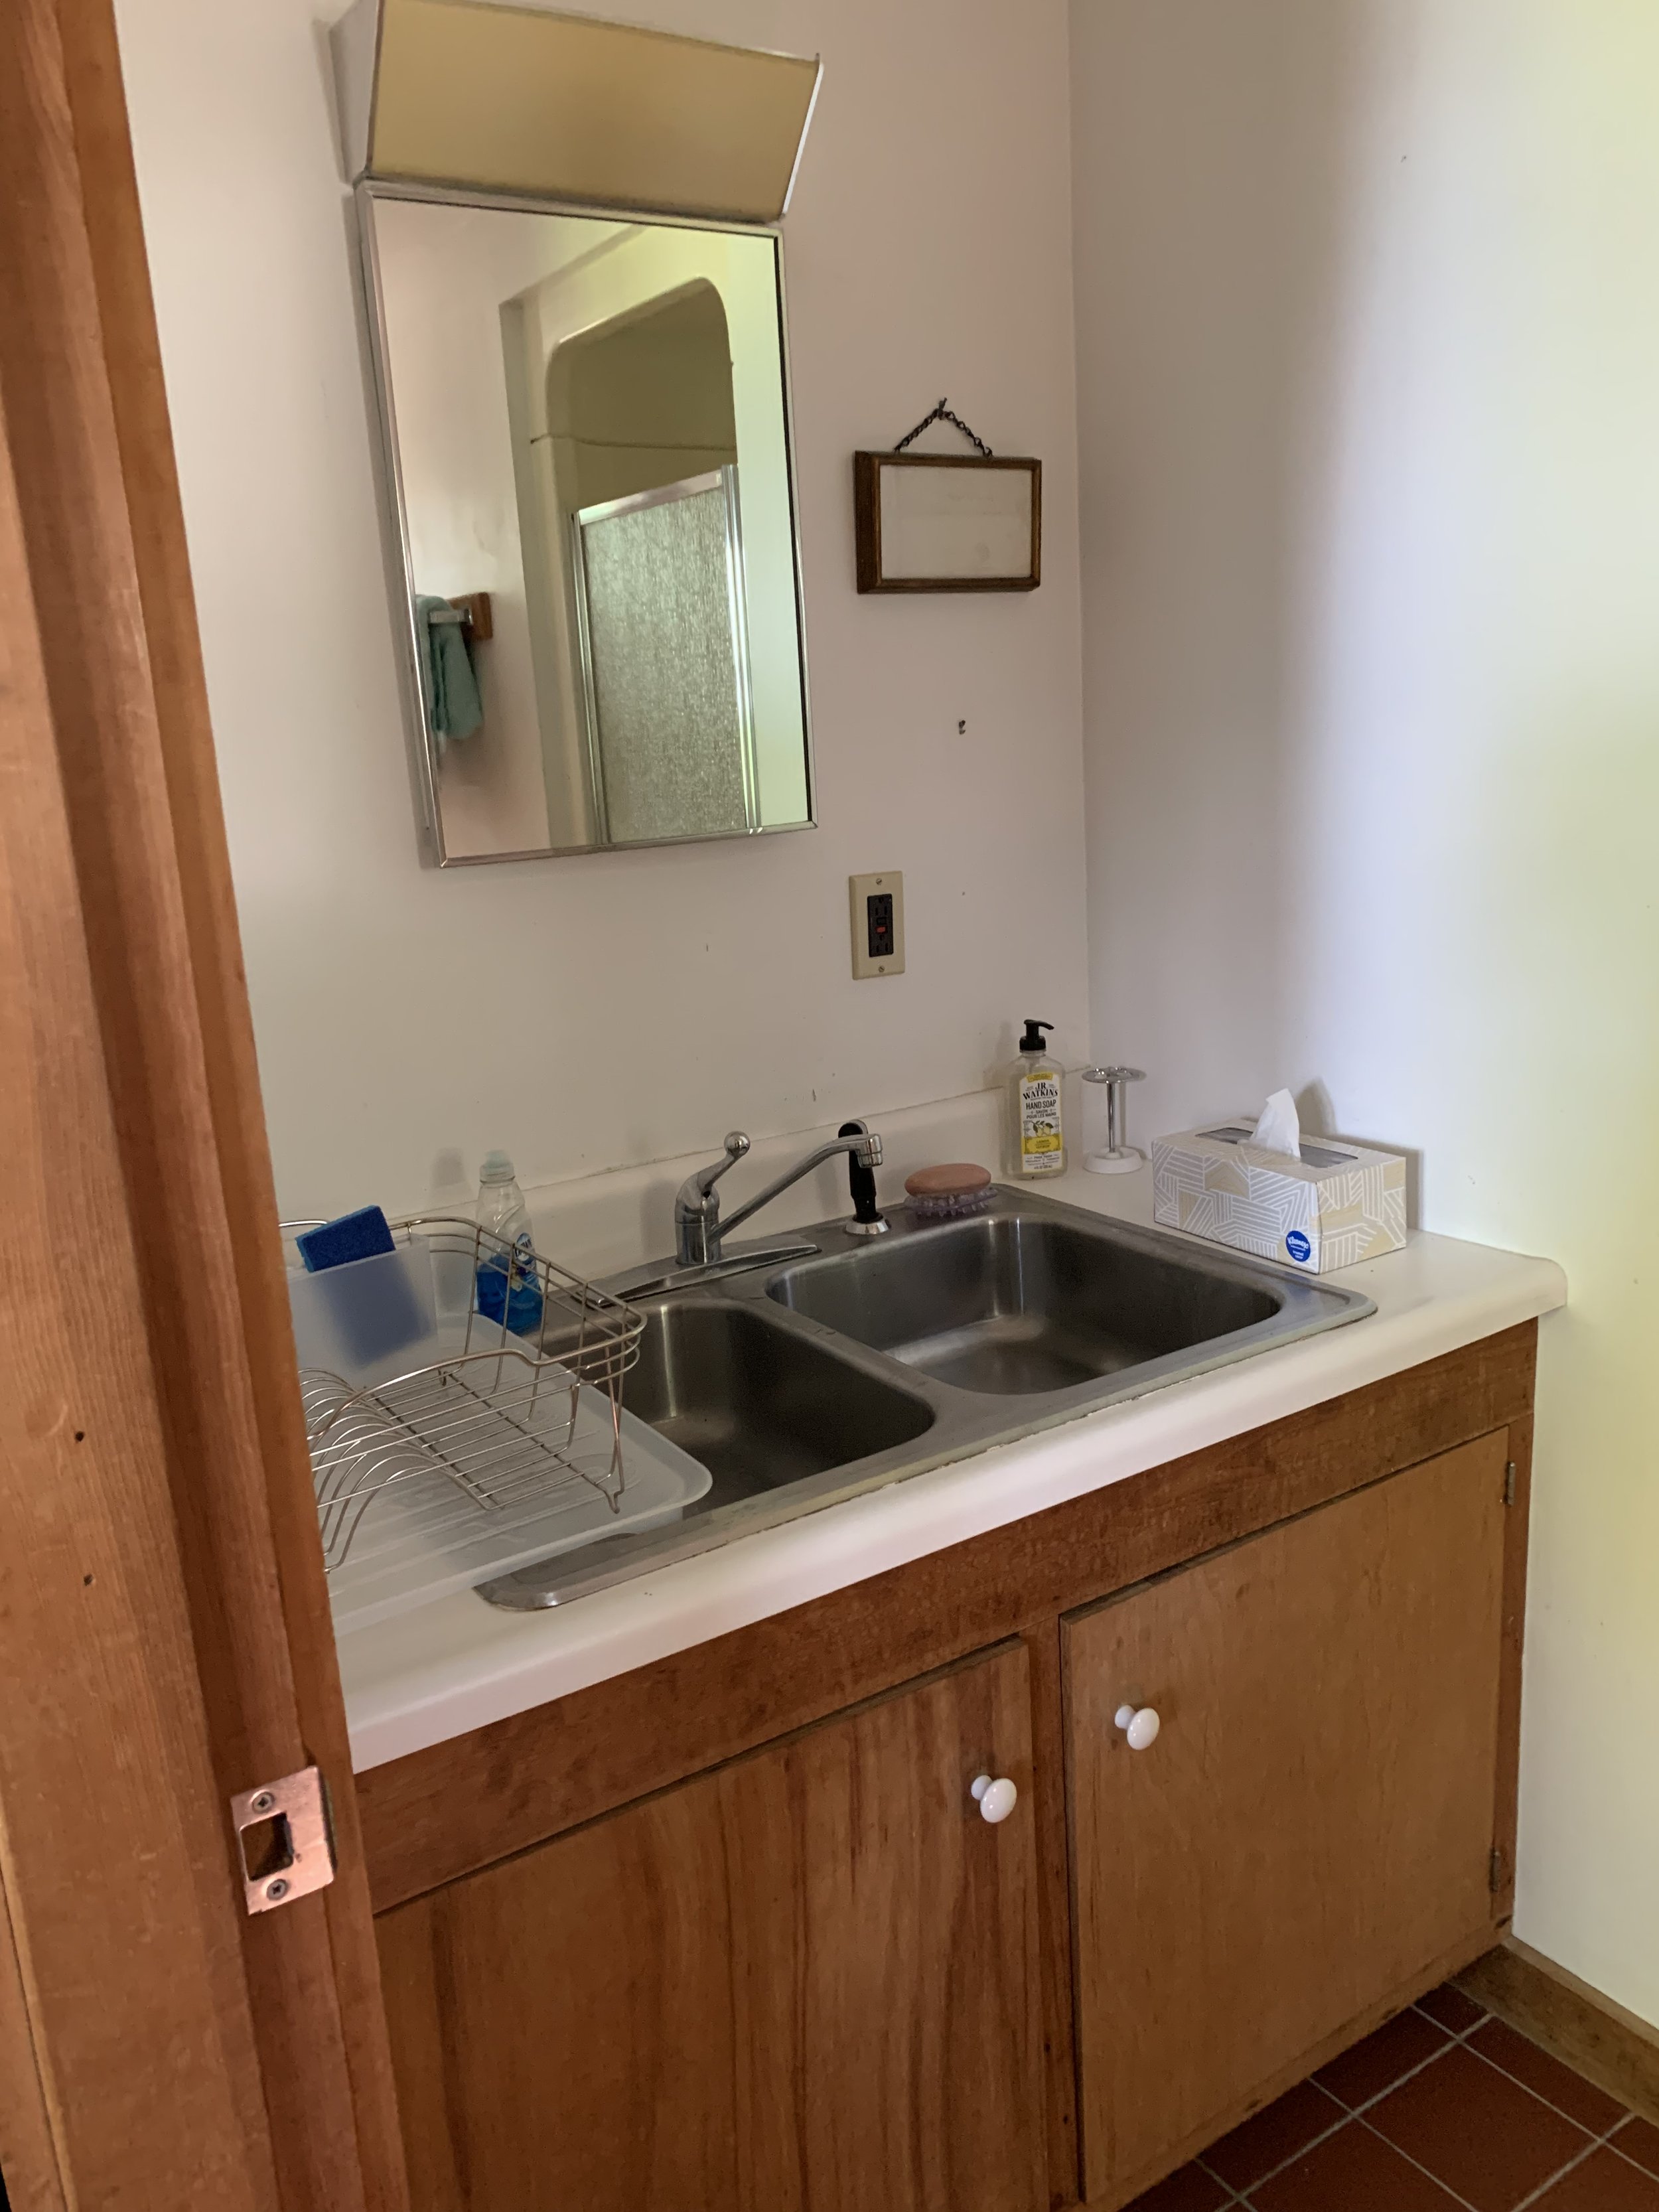  Bathroom sink doubles as kitchen sink 